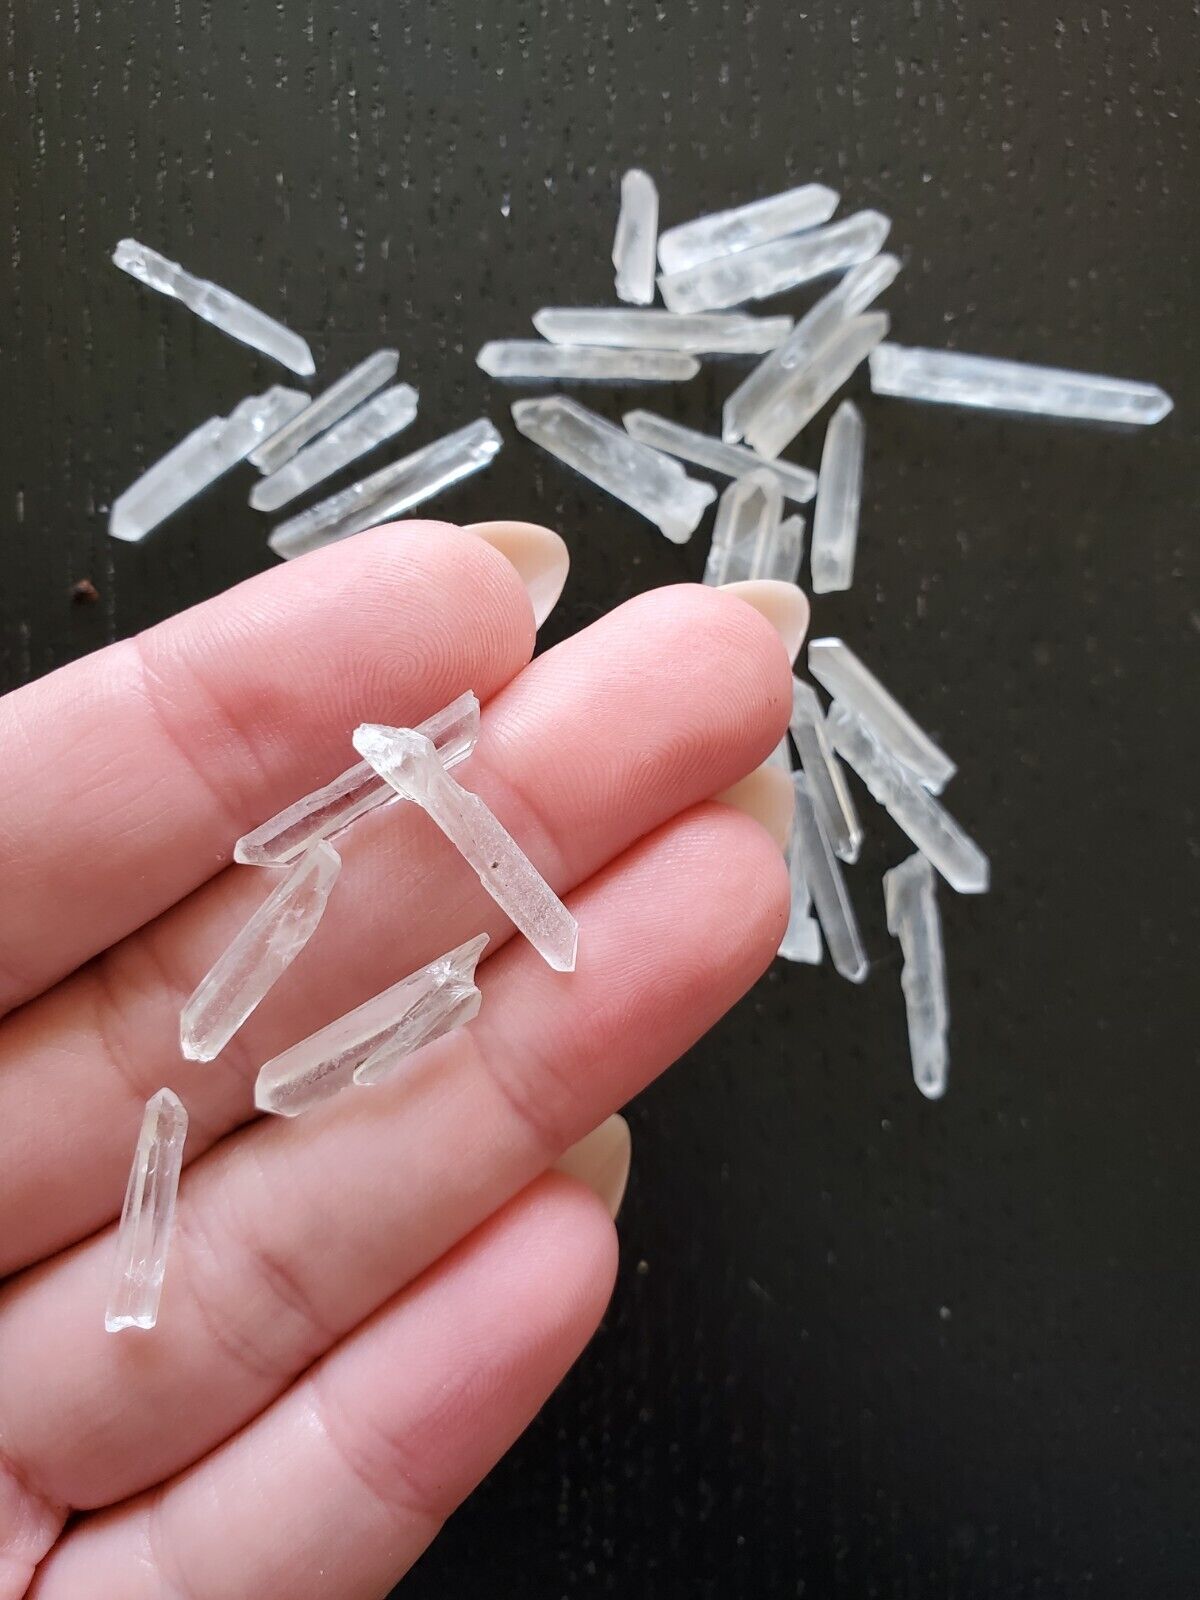 10g Lumerian Seed Quartz Crystal Shards Lot 30pcs For Jewelry, Crafts, Art